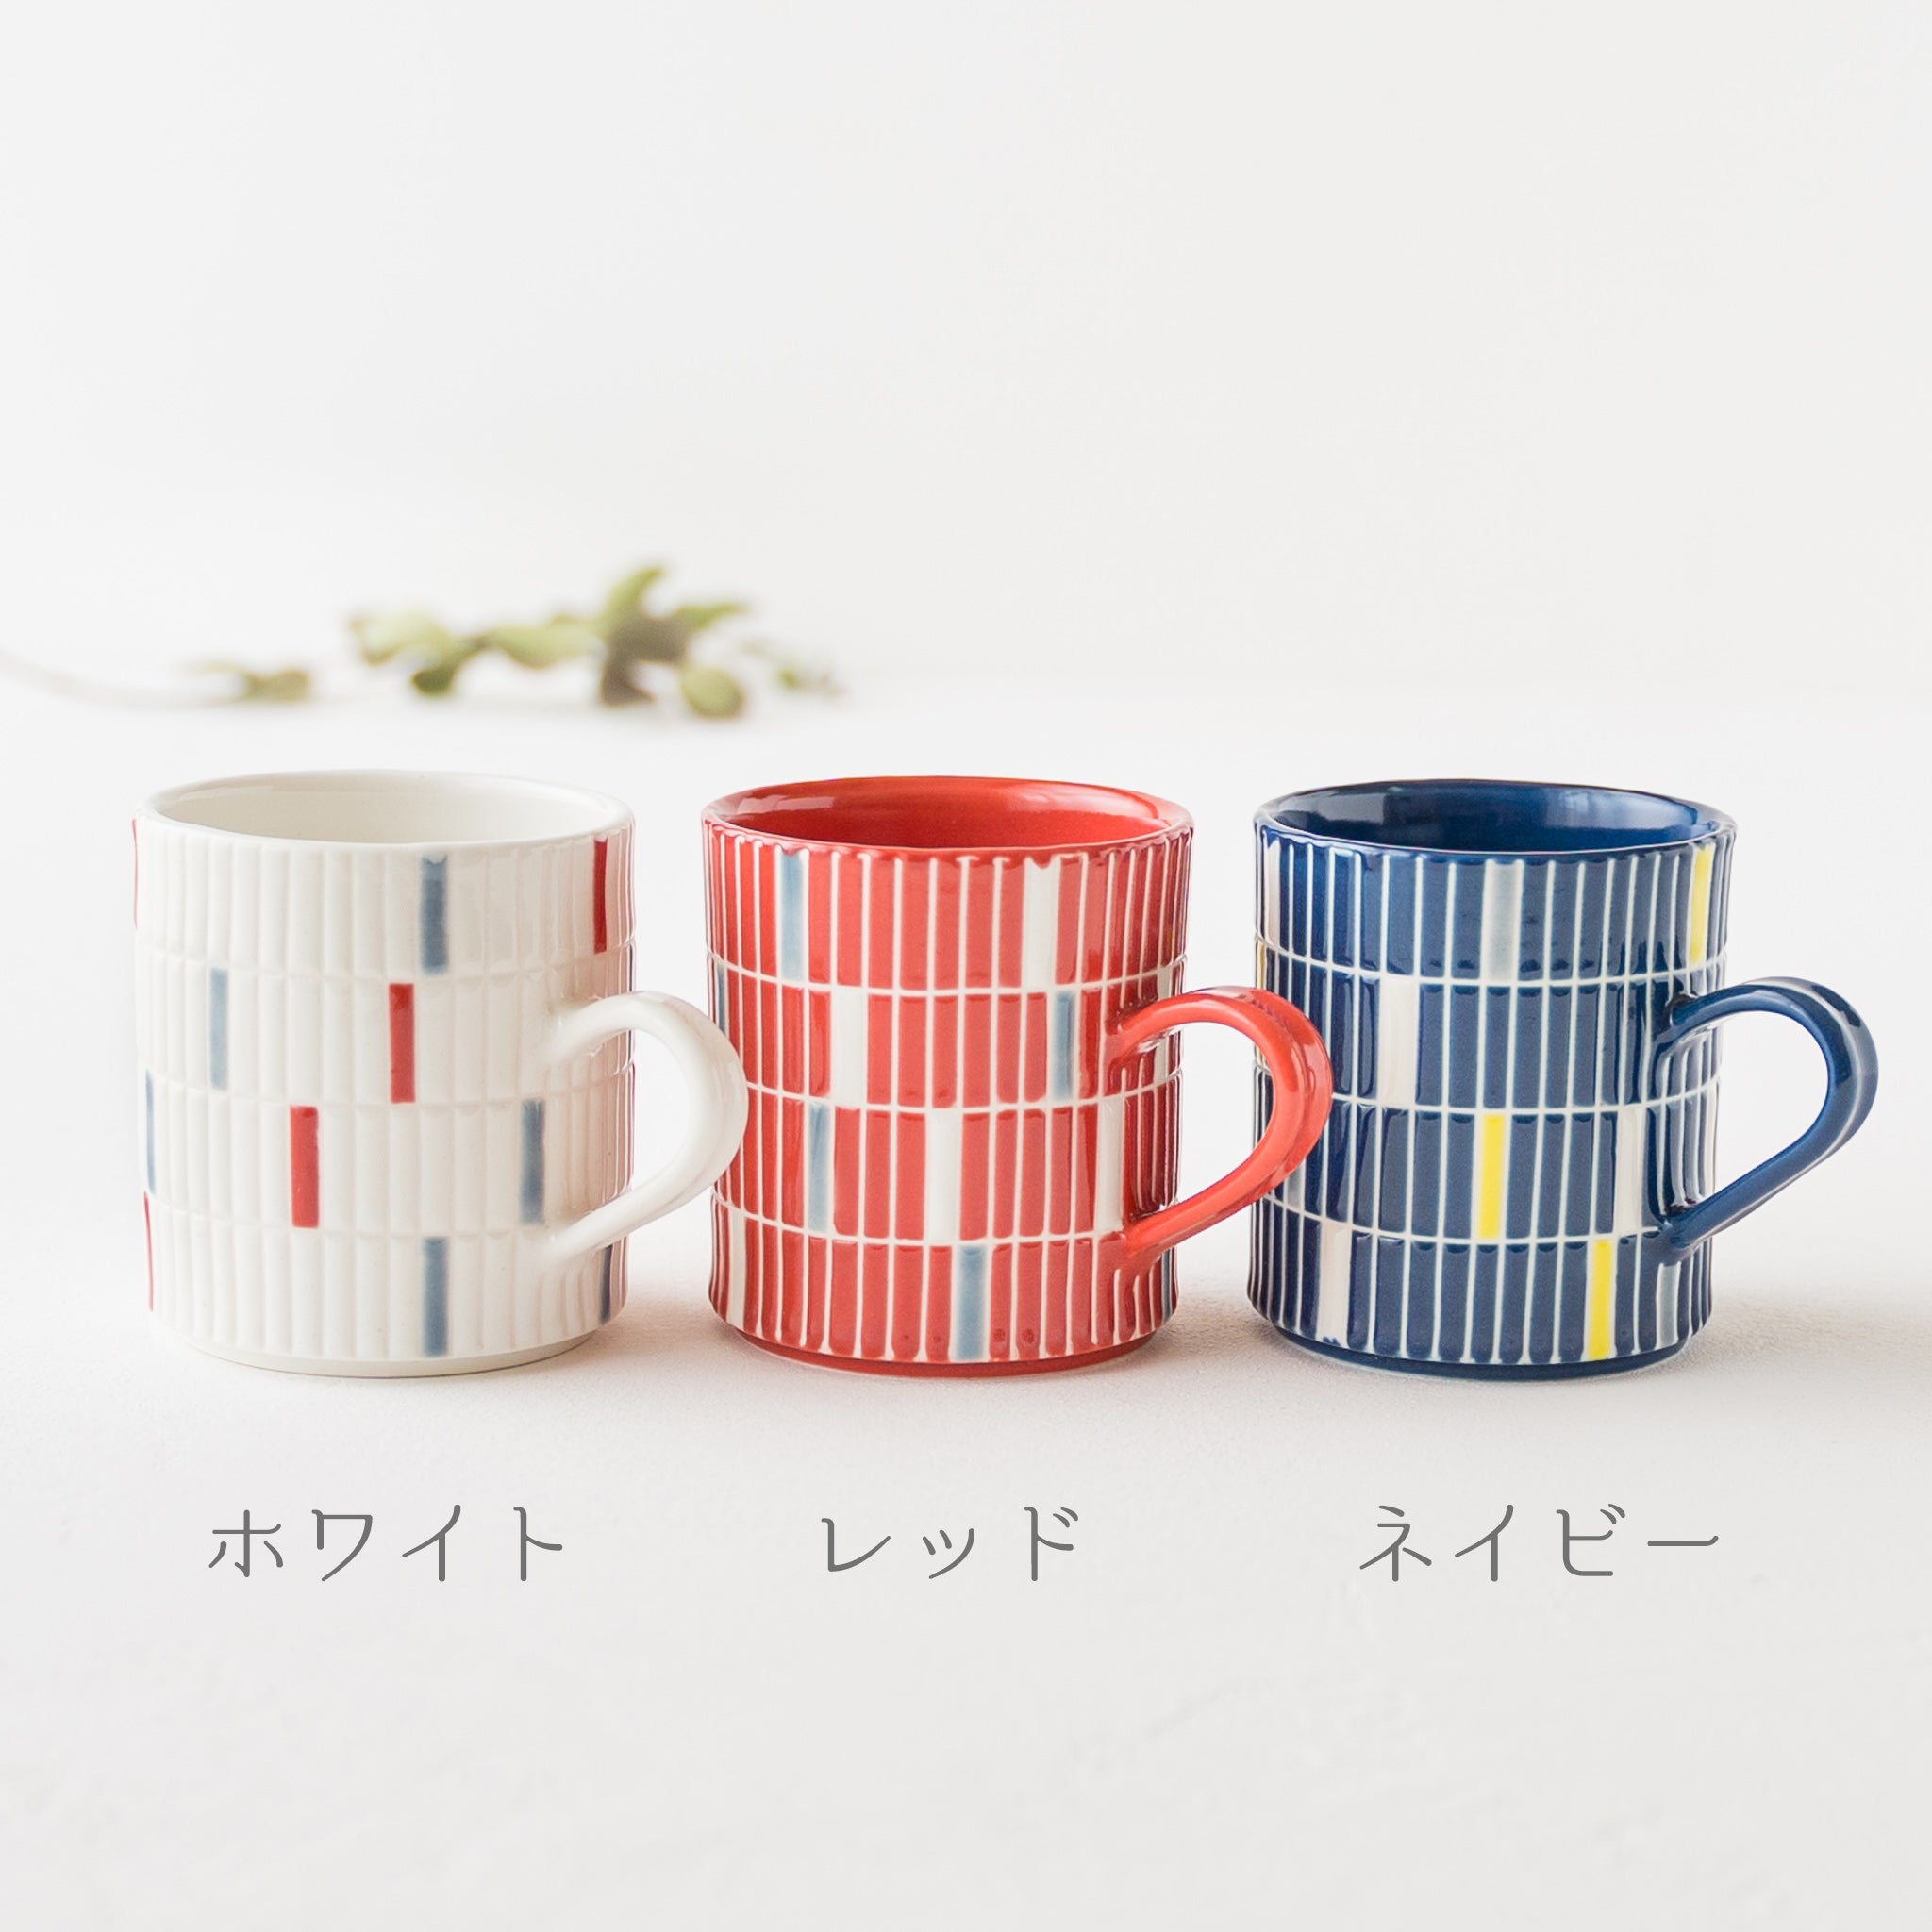 Yukari Nakagawa's Tile Mug